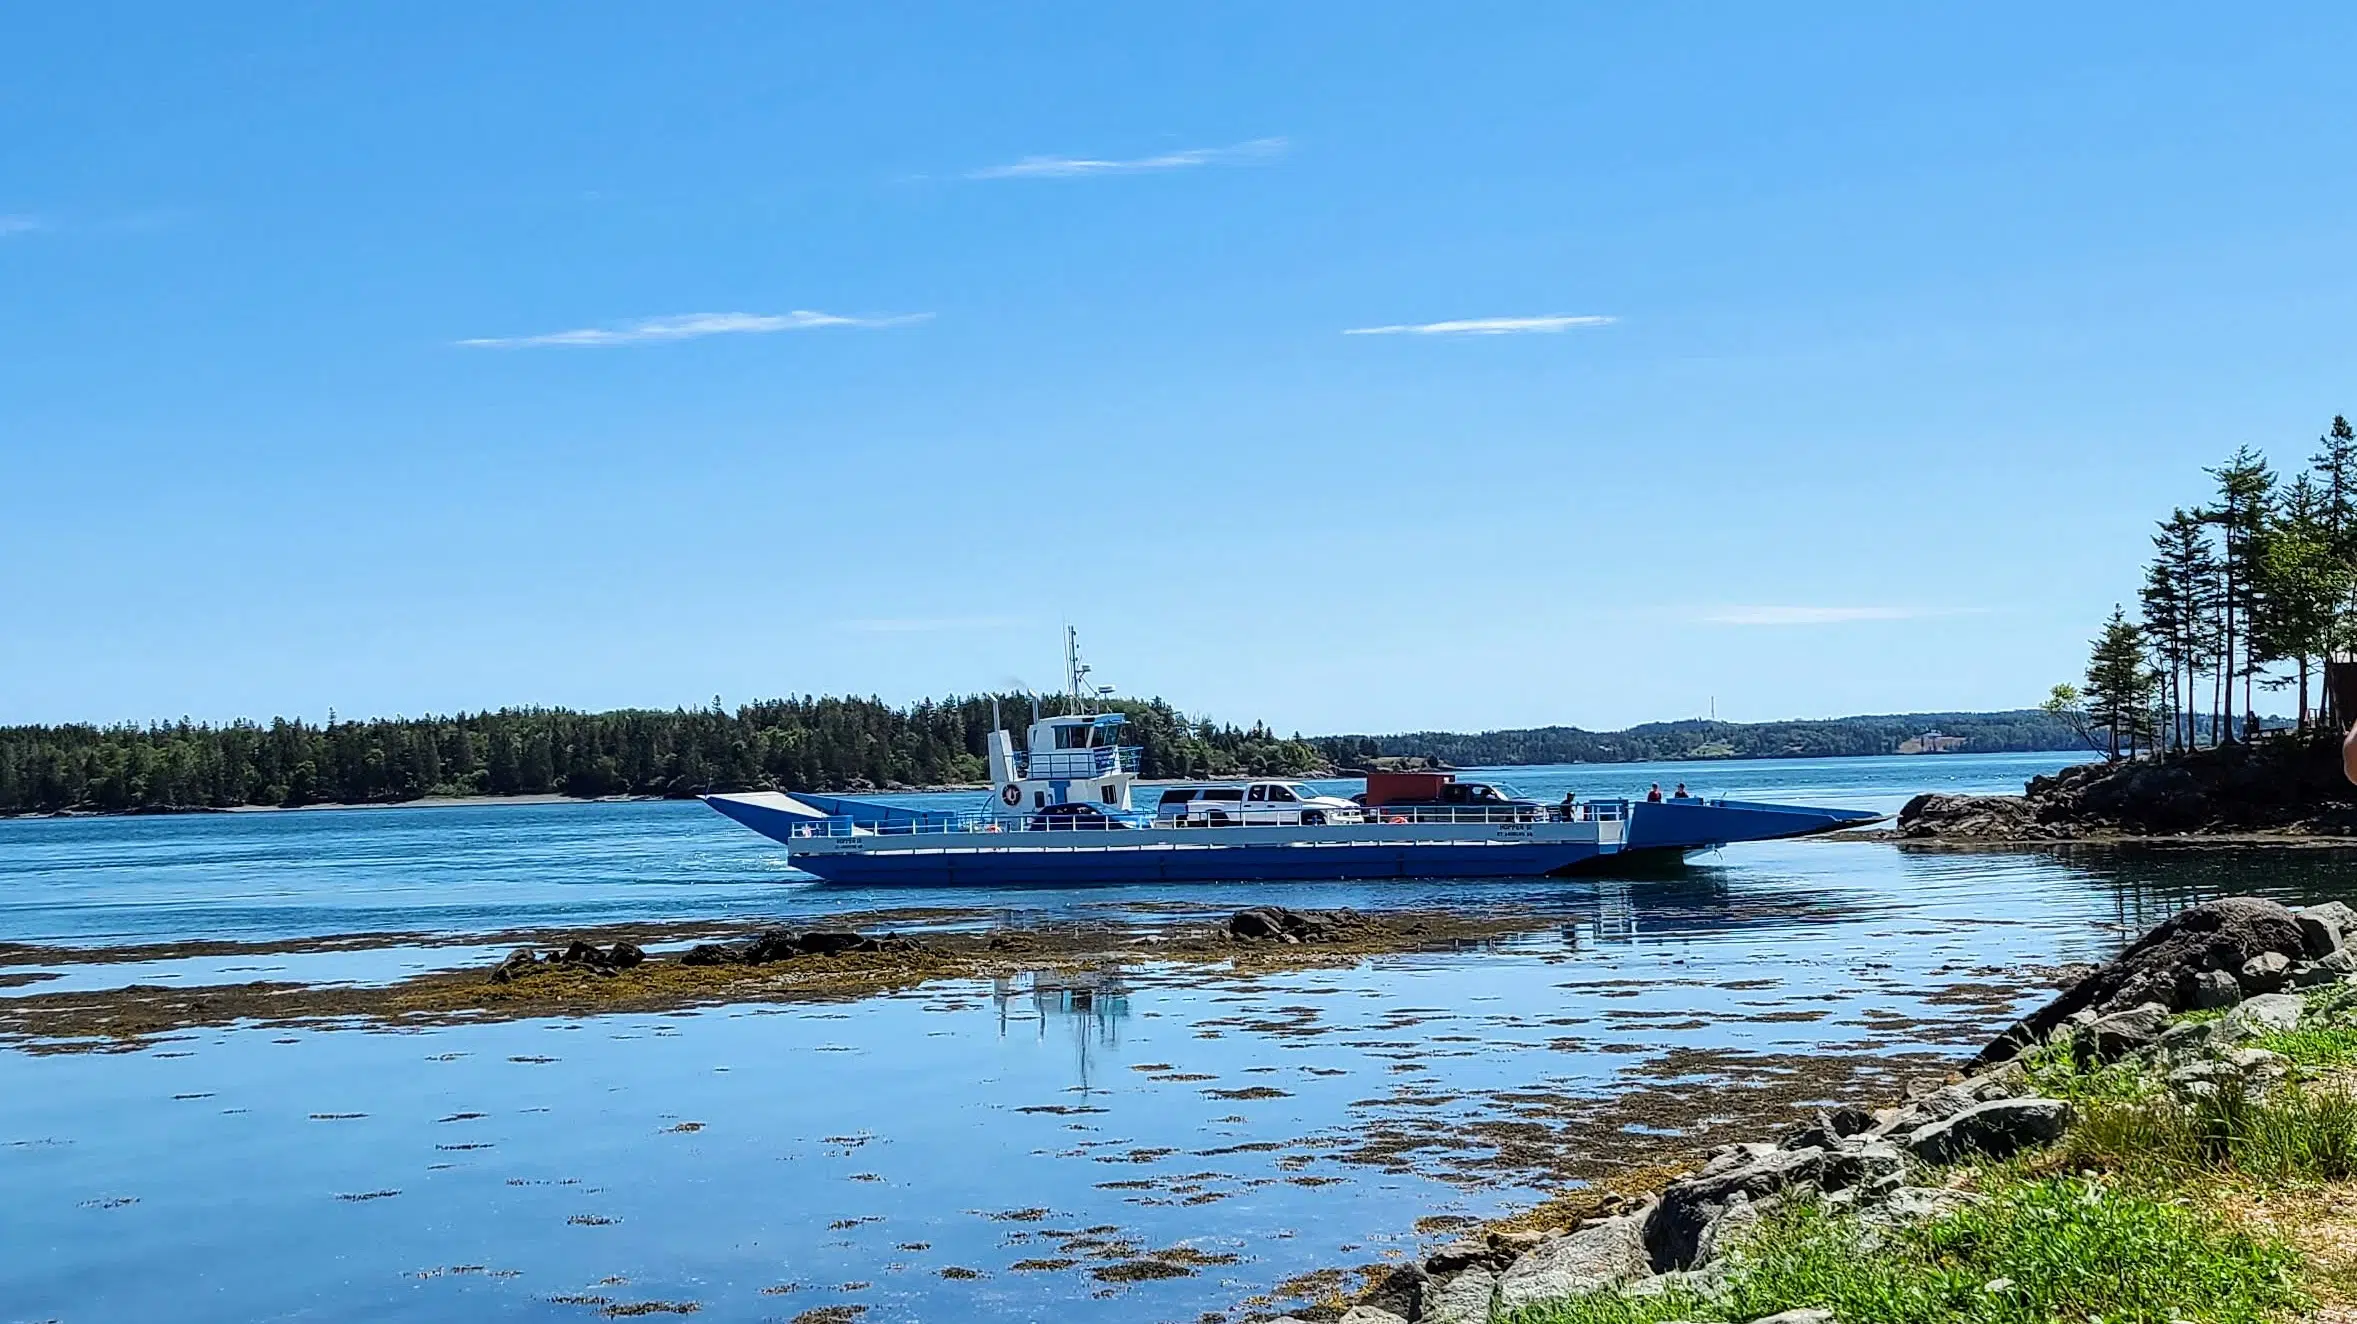 Ottawa Needs To Fund Year-Round Campobello Ferry: MP